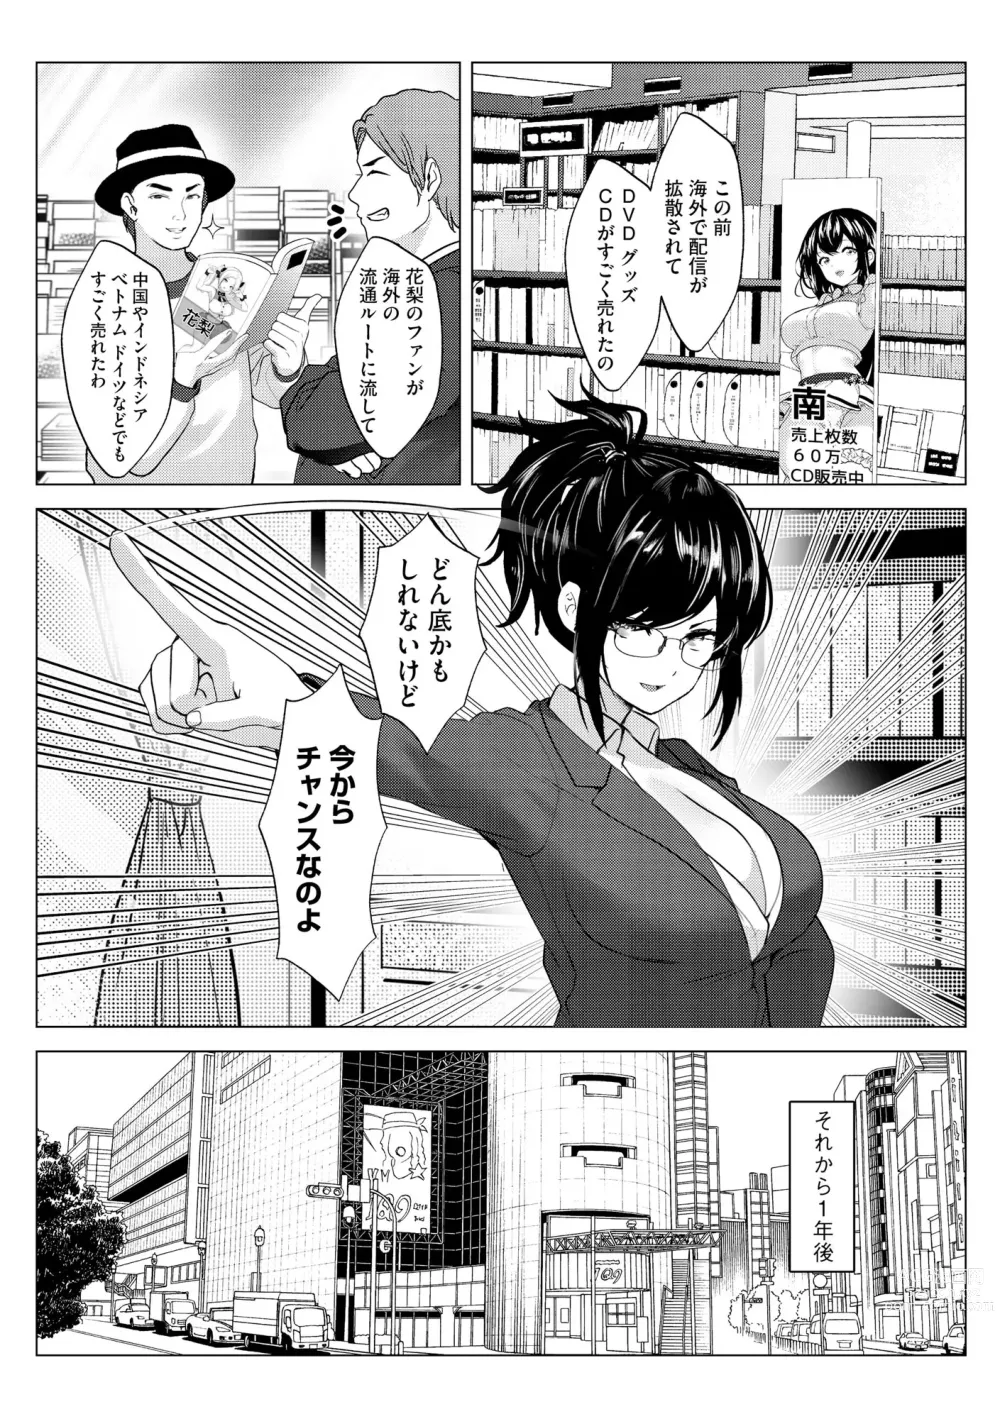 Page 381 of manga Cyberia Plus Vol. 16